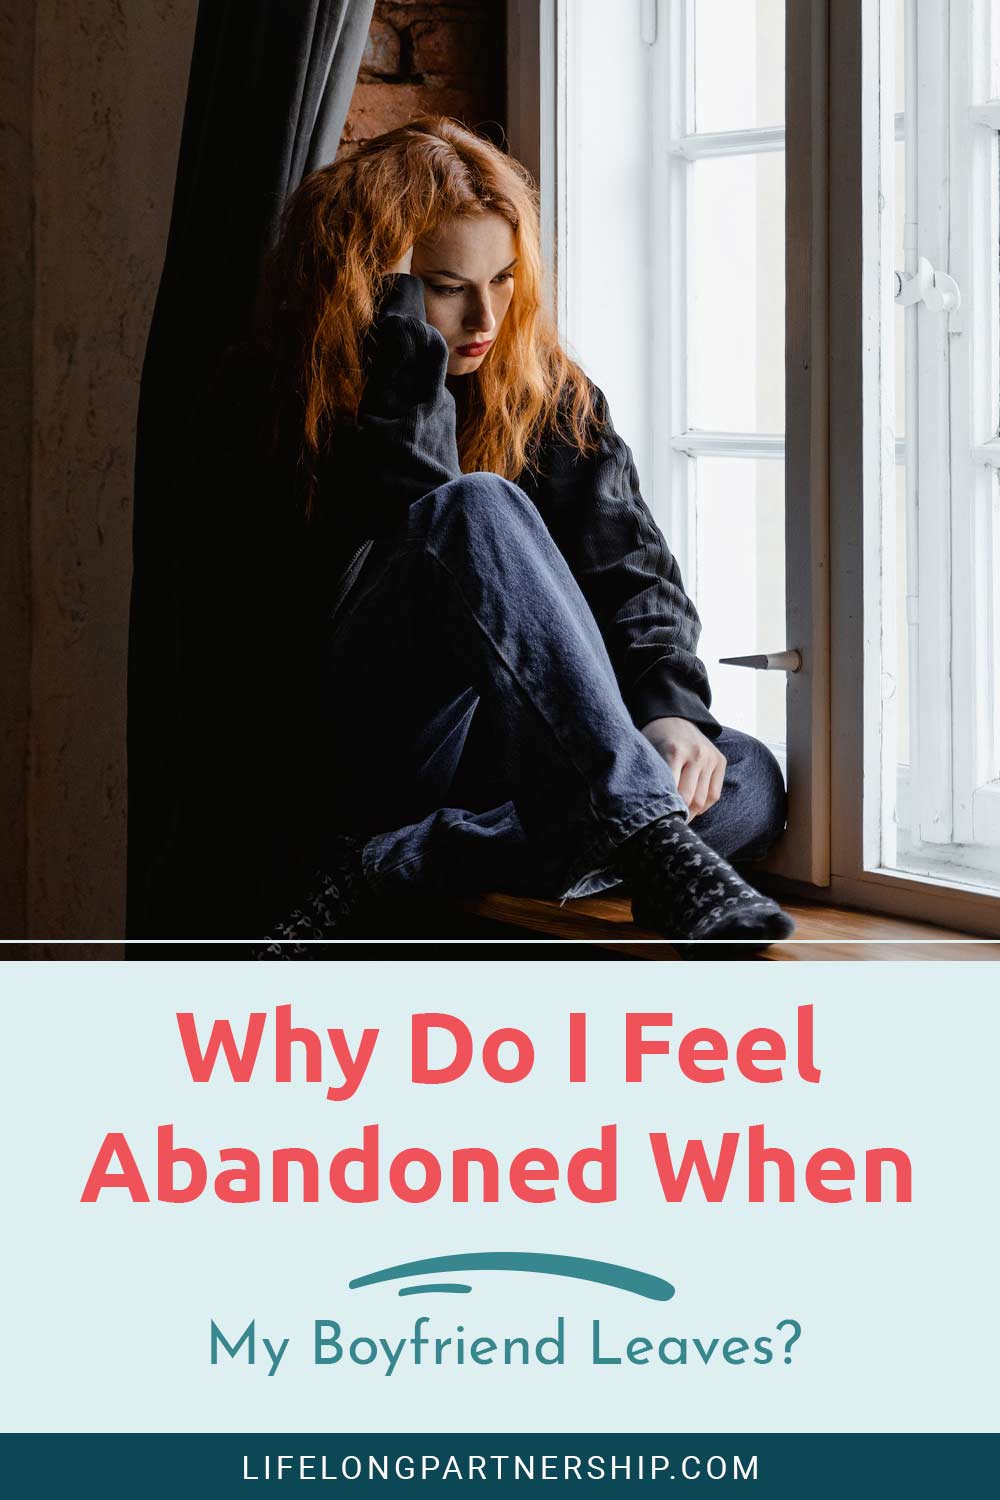 Why Do I Feel Abandoned When My Boyfriend Leaves?